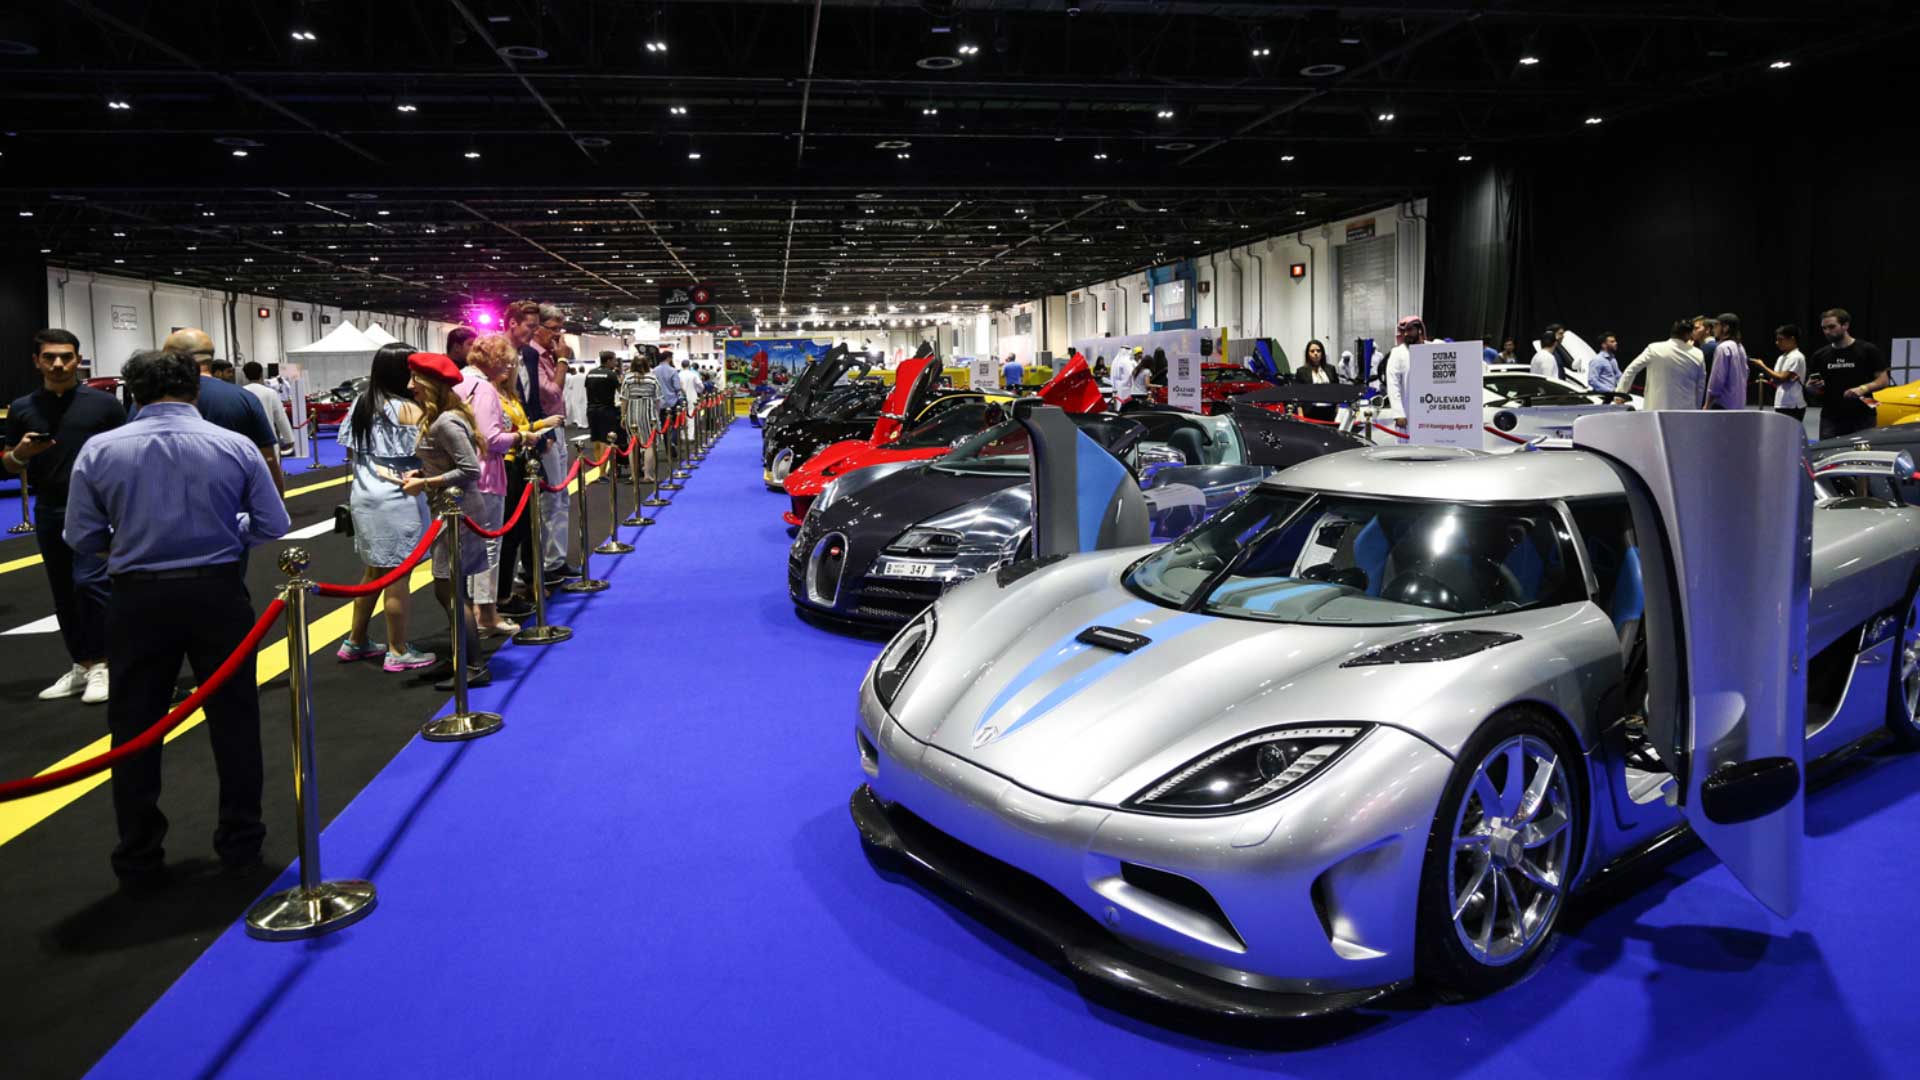 Car Shows in Dubai